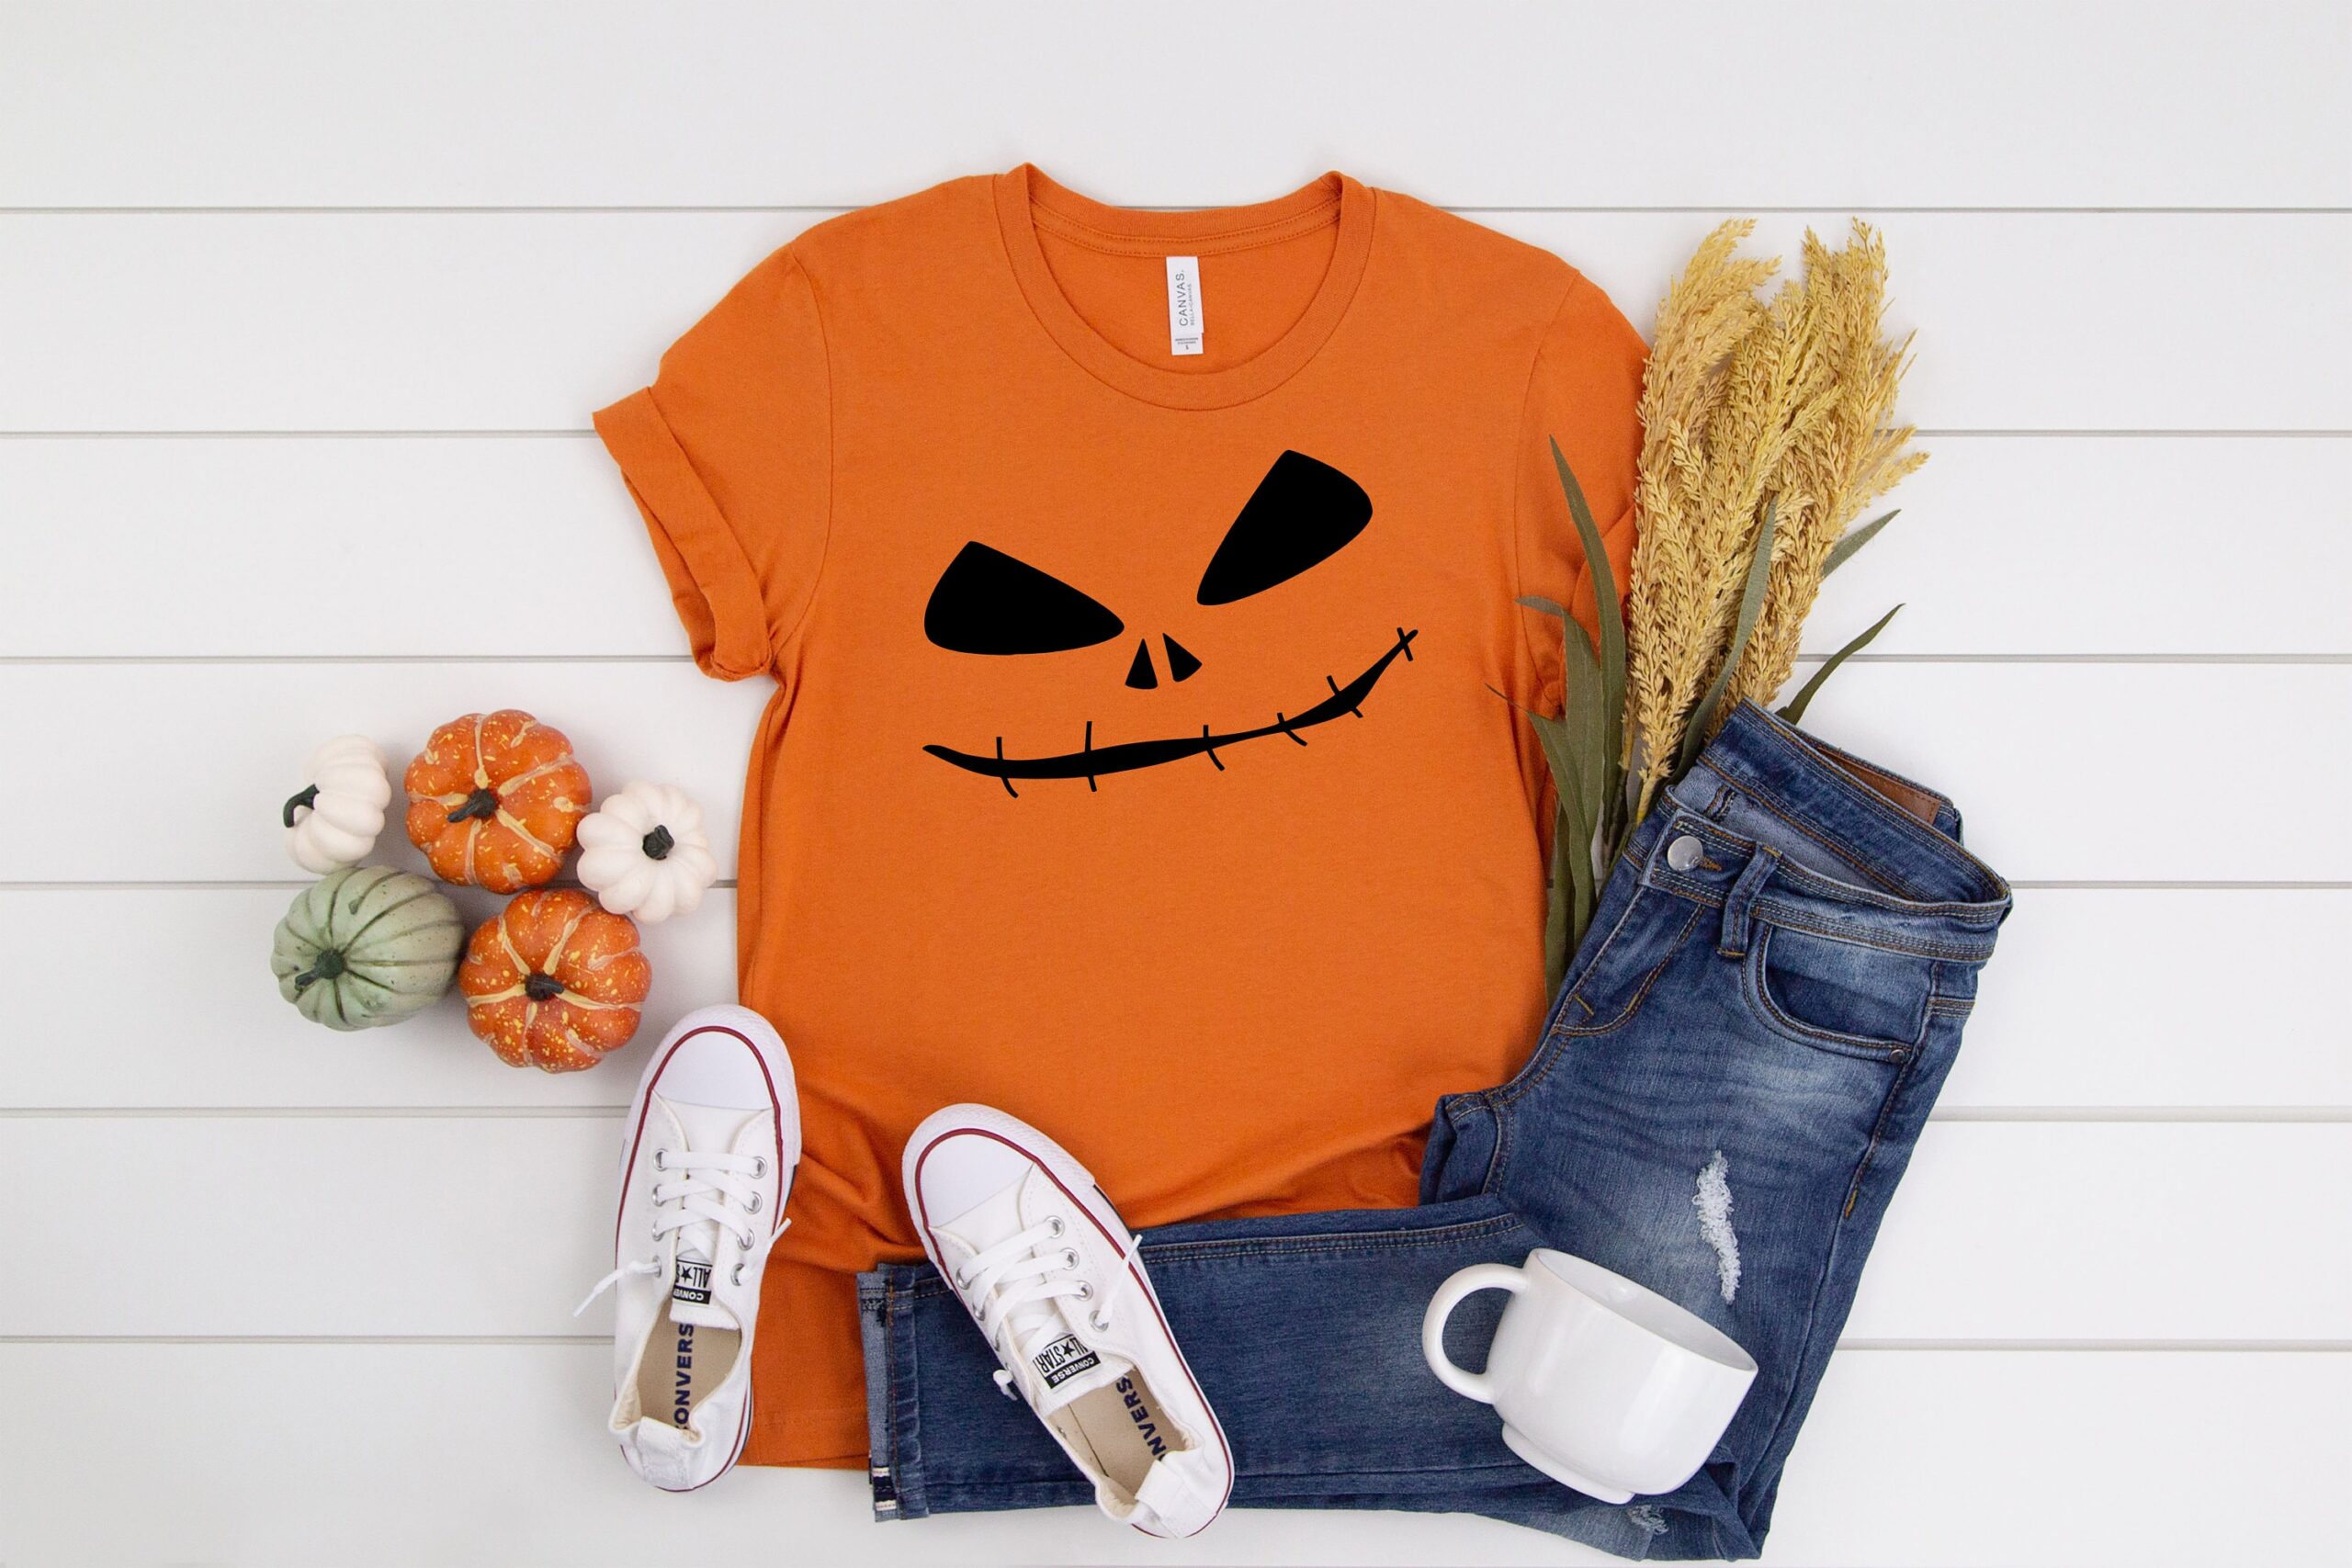 Scary Halloween Funny Pumpkin Carving Shirt